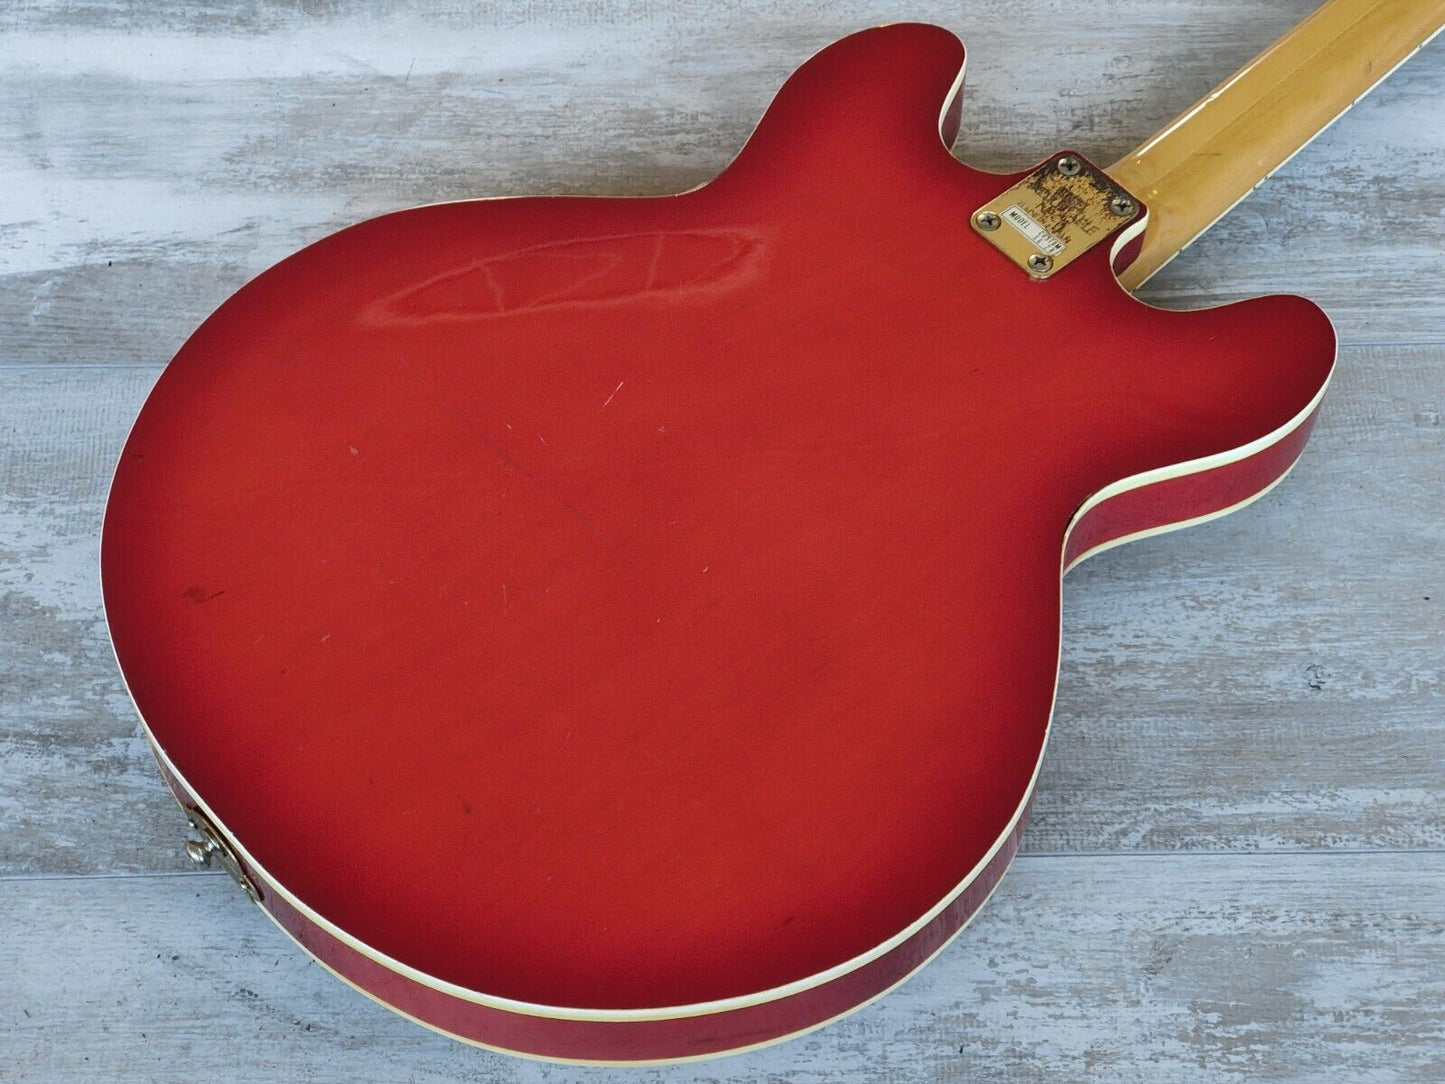 1970's Guyatone (by Matsumoku) SG-28 Hollowbody Guitar (Cherry Red)